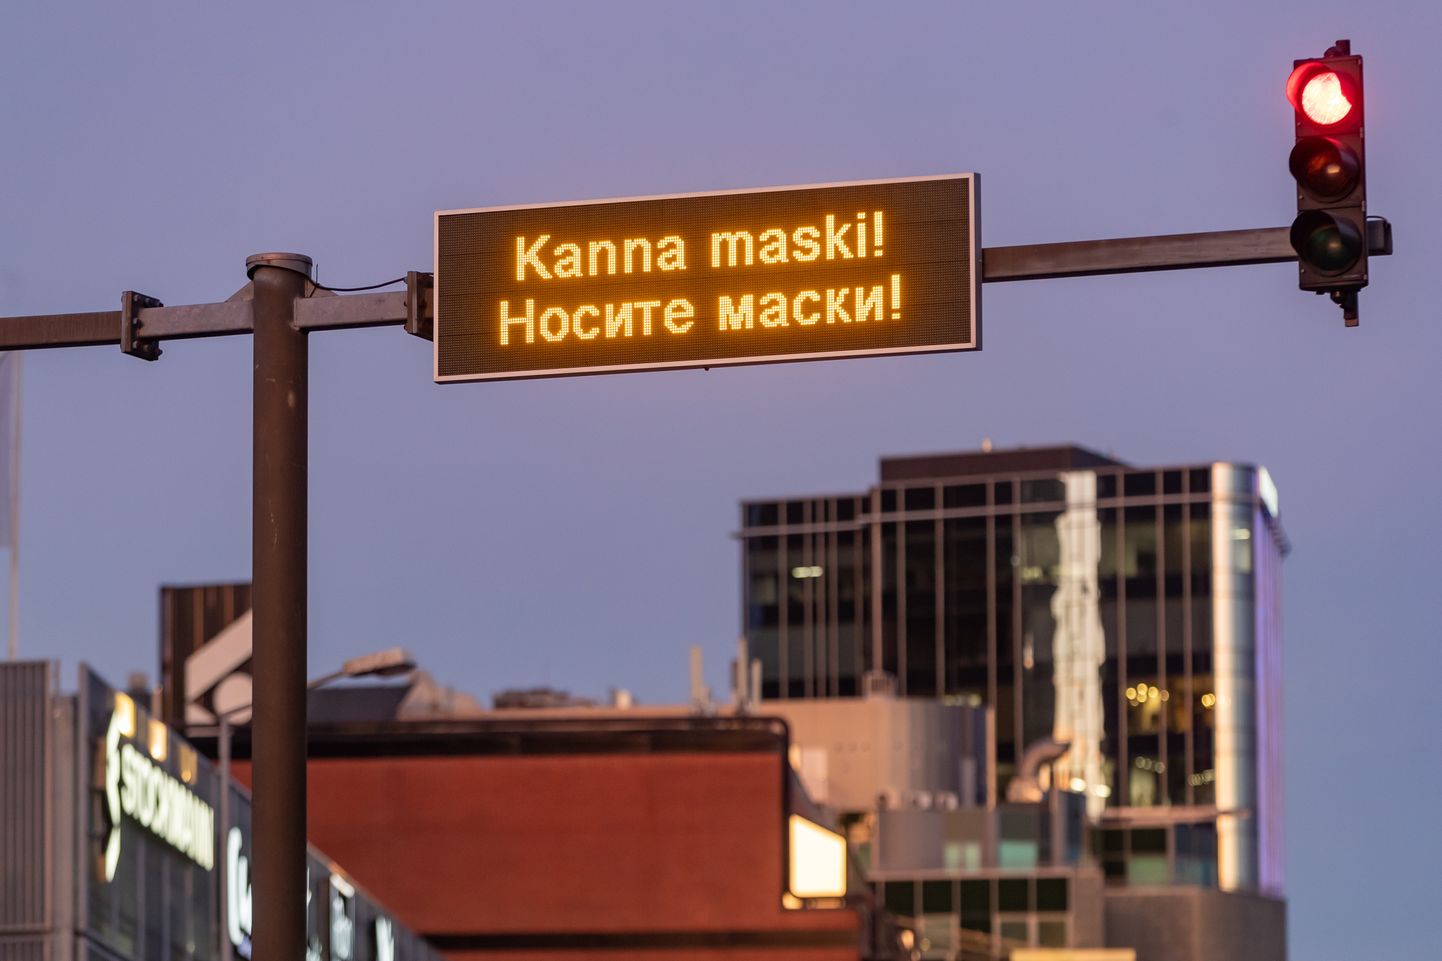 Tallinn, 07.12.2020
"Kanna maski"! Tallinna liiklusinfo tabloodel.